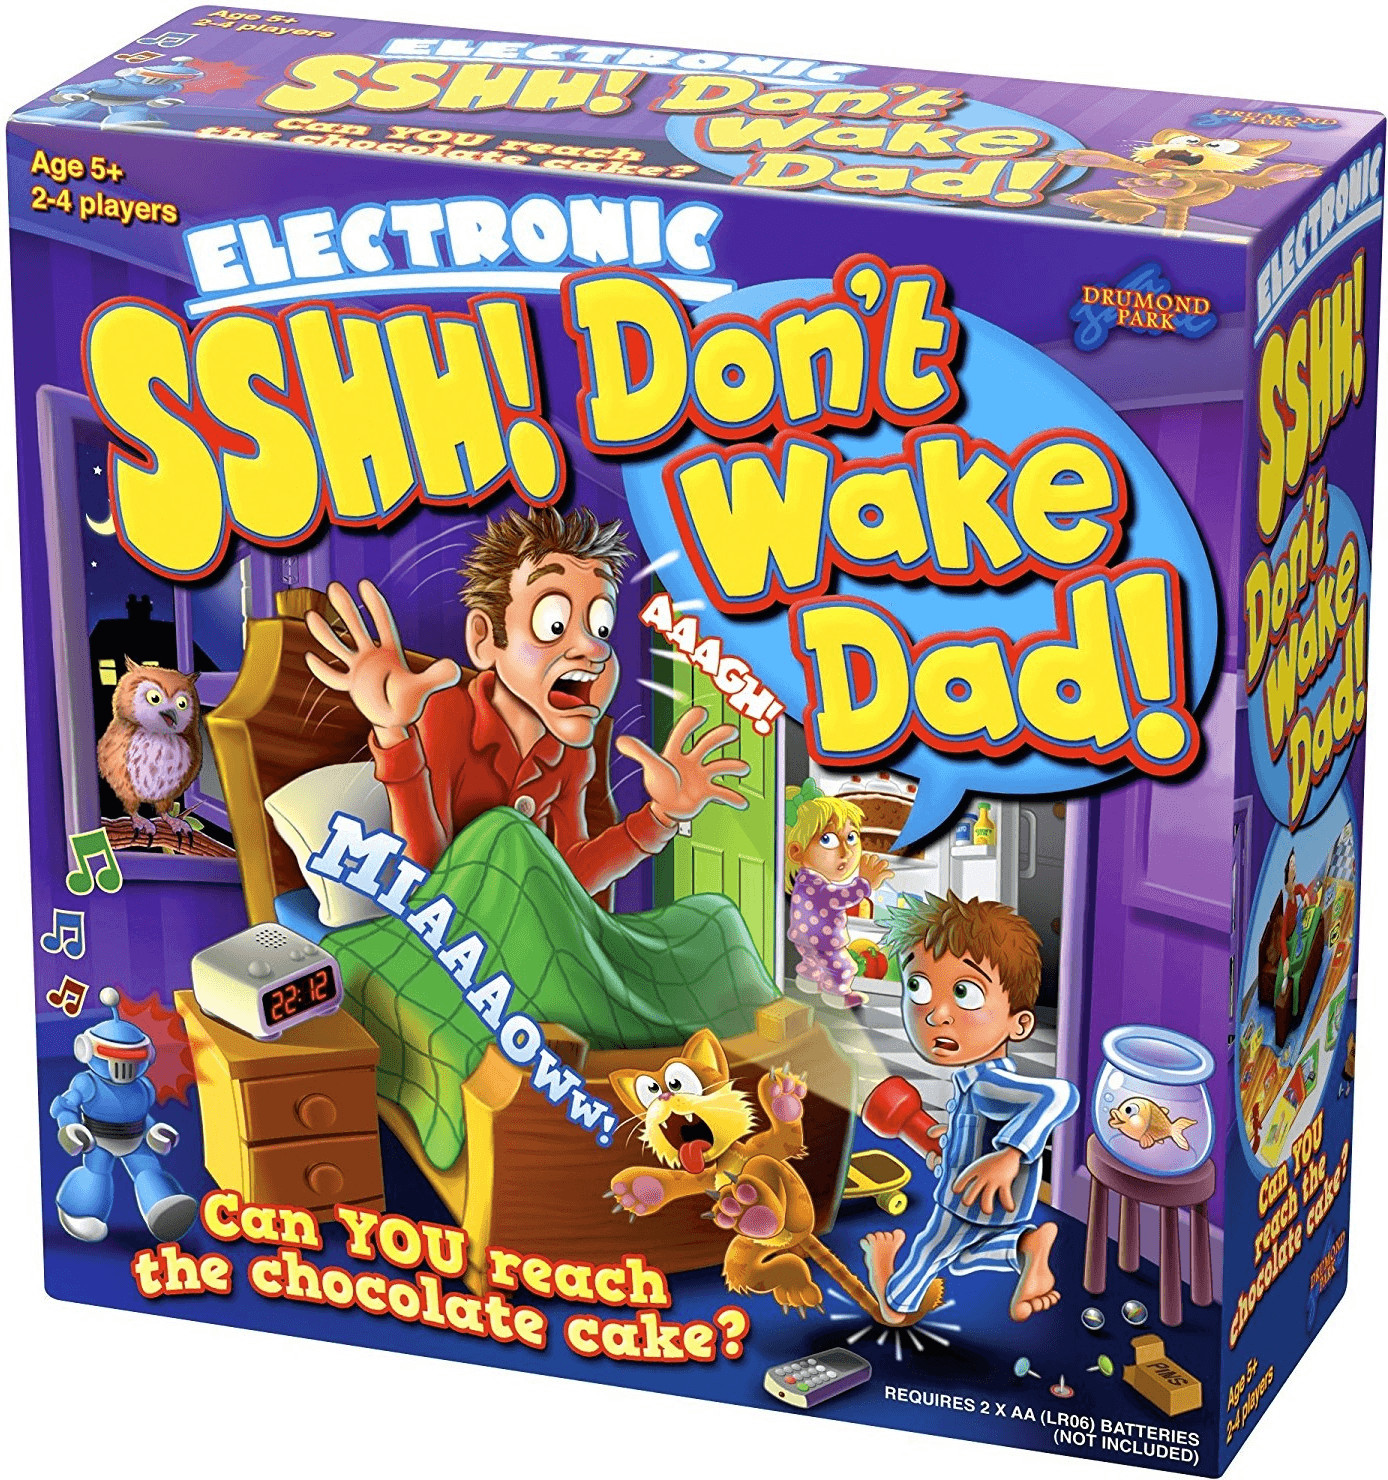 Sshh! Don't Wake Dad!